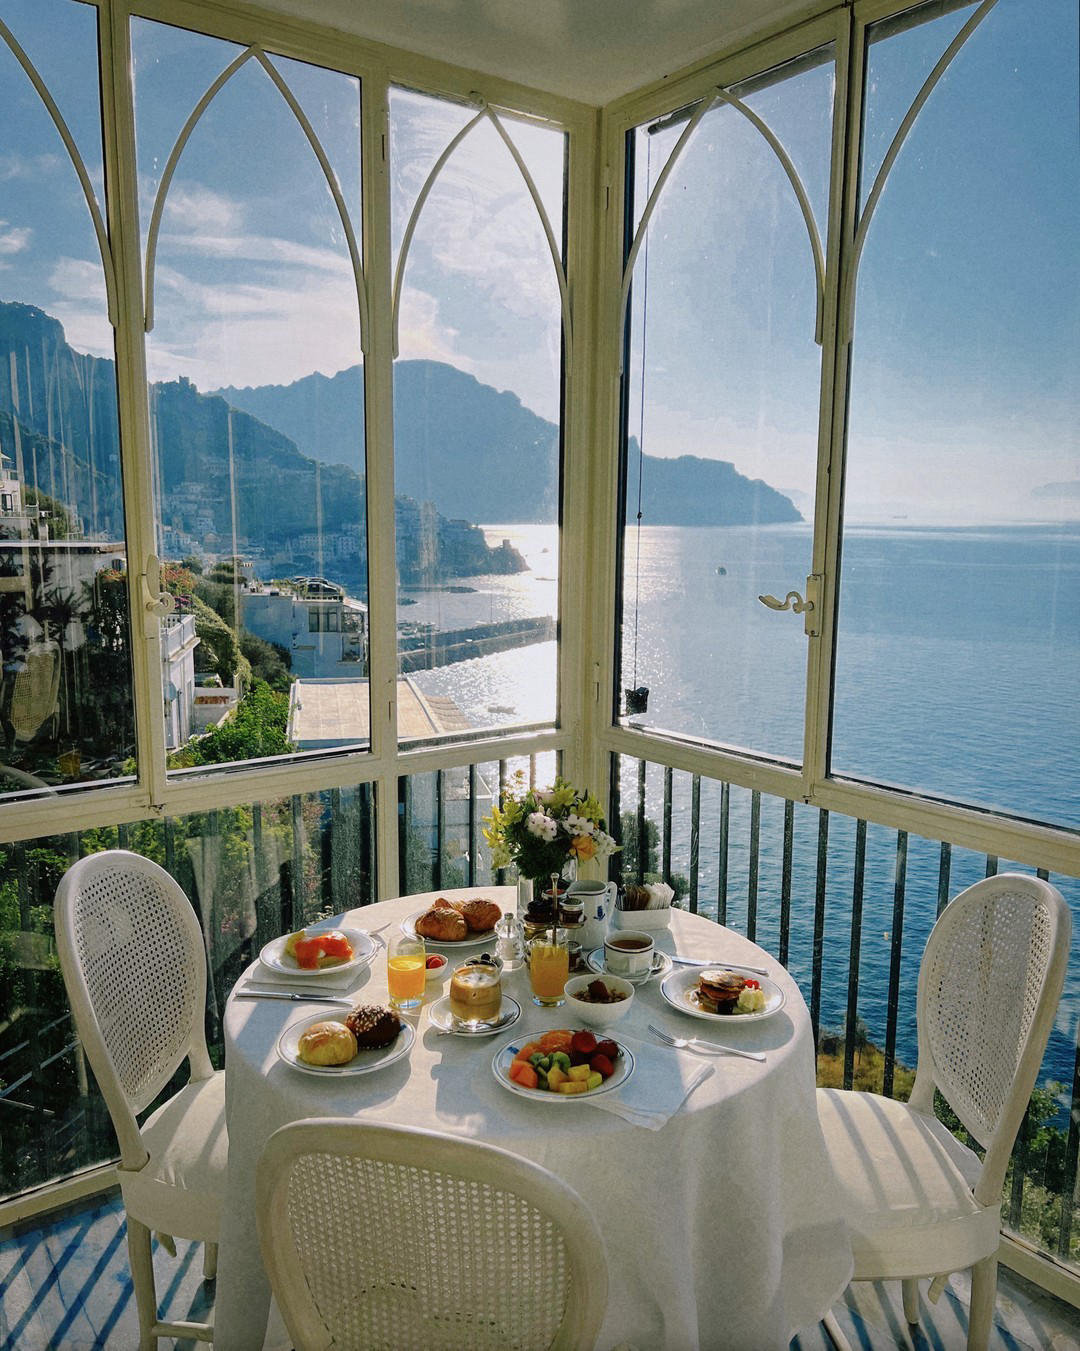 Hotel Santa Caterina - Breakfast is always a highlight